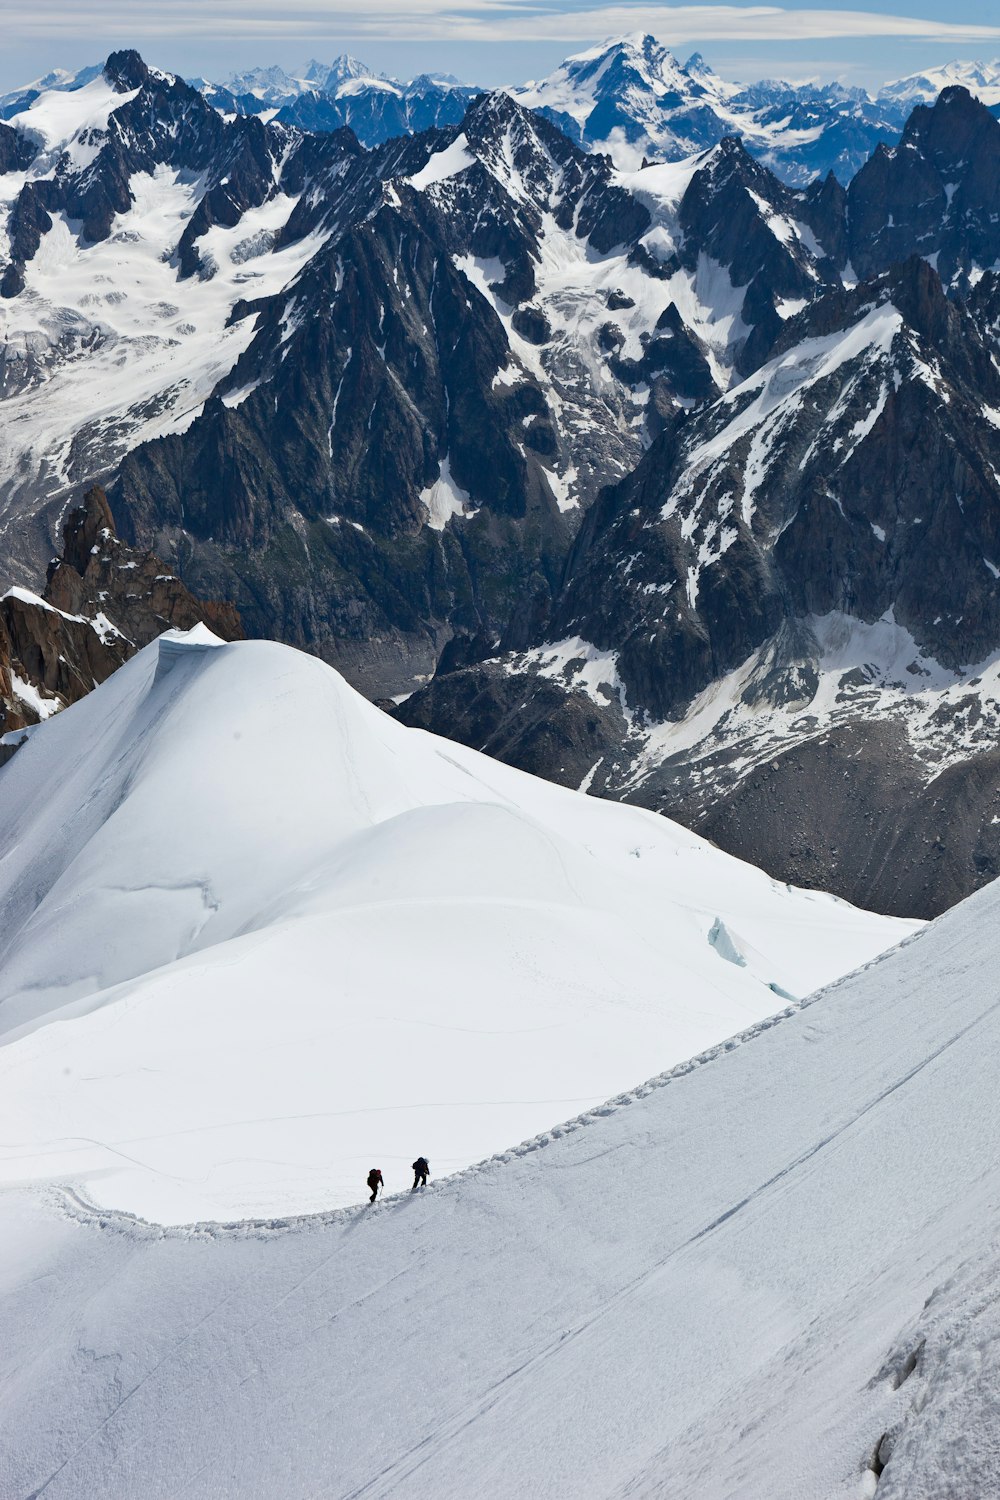 Vista aérea de dos personas que suben a la montaña nevada